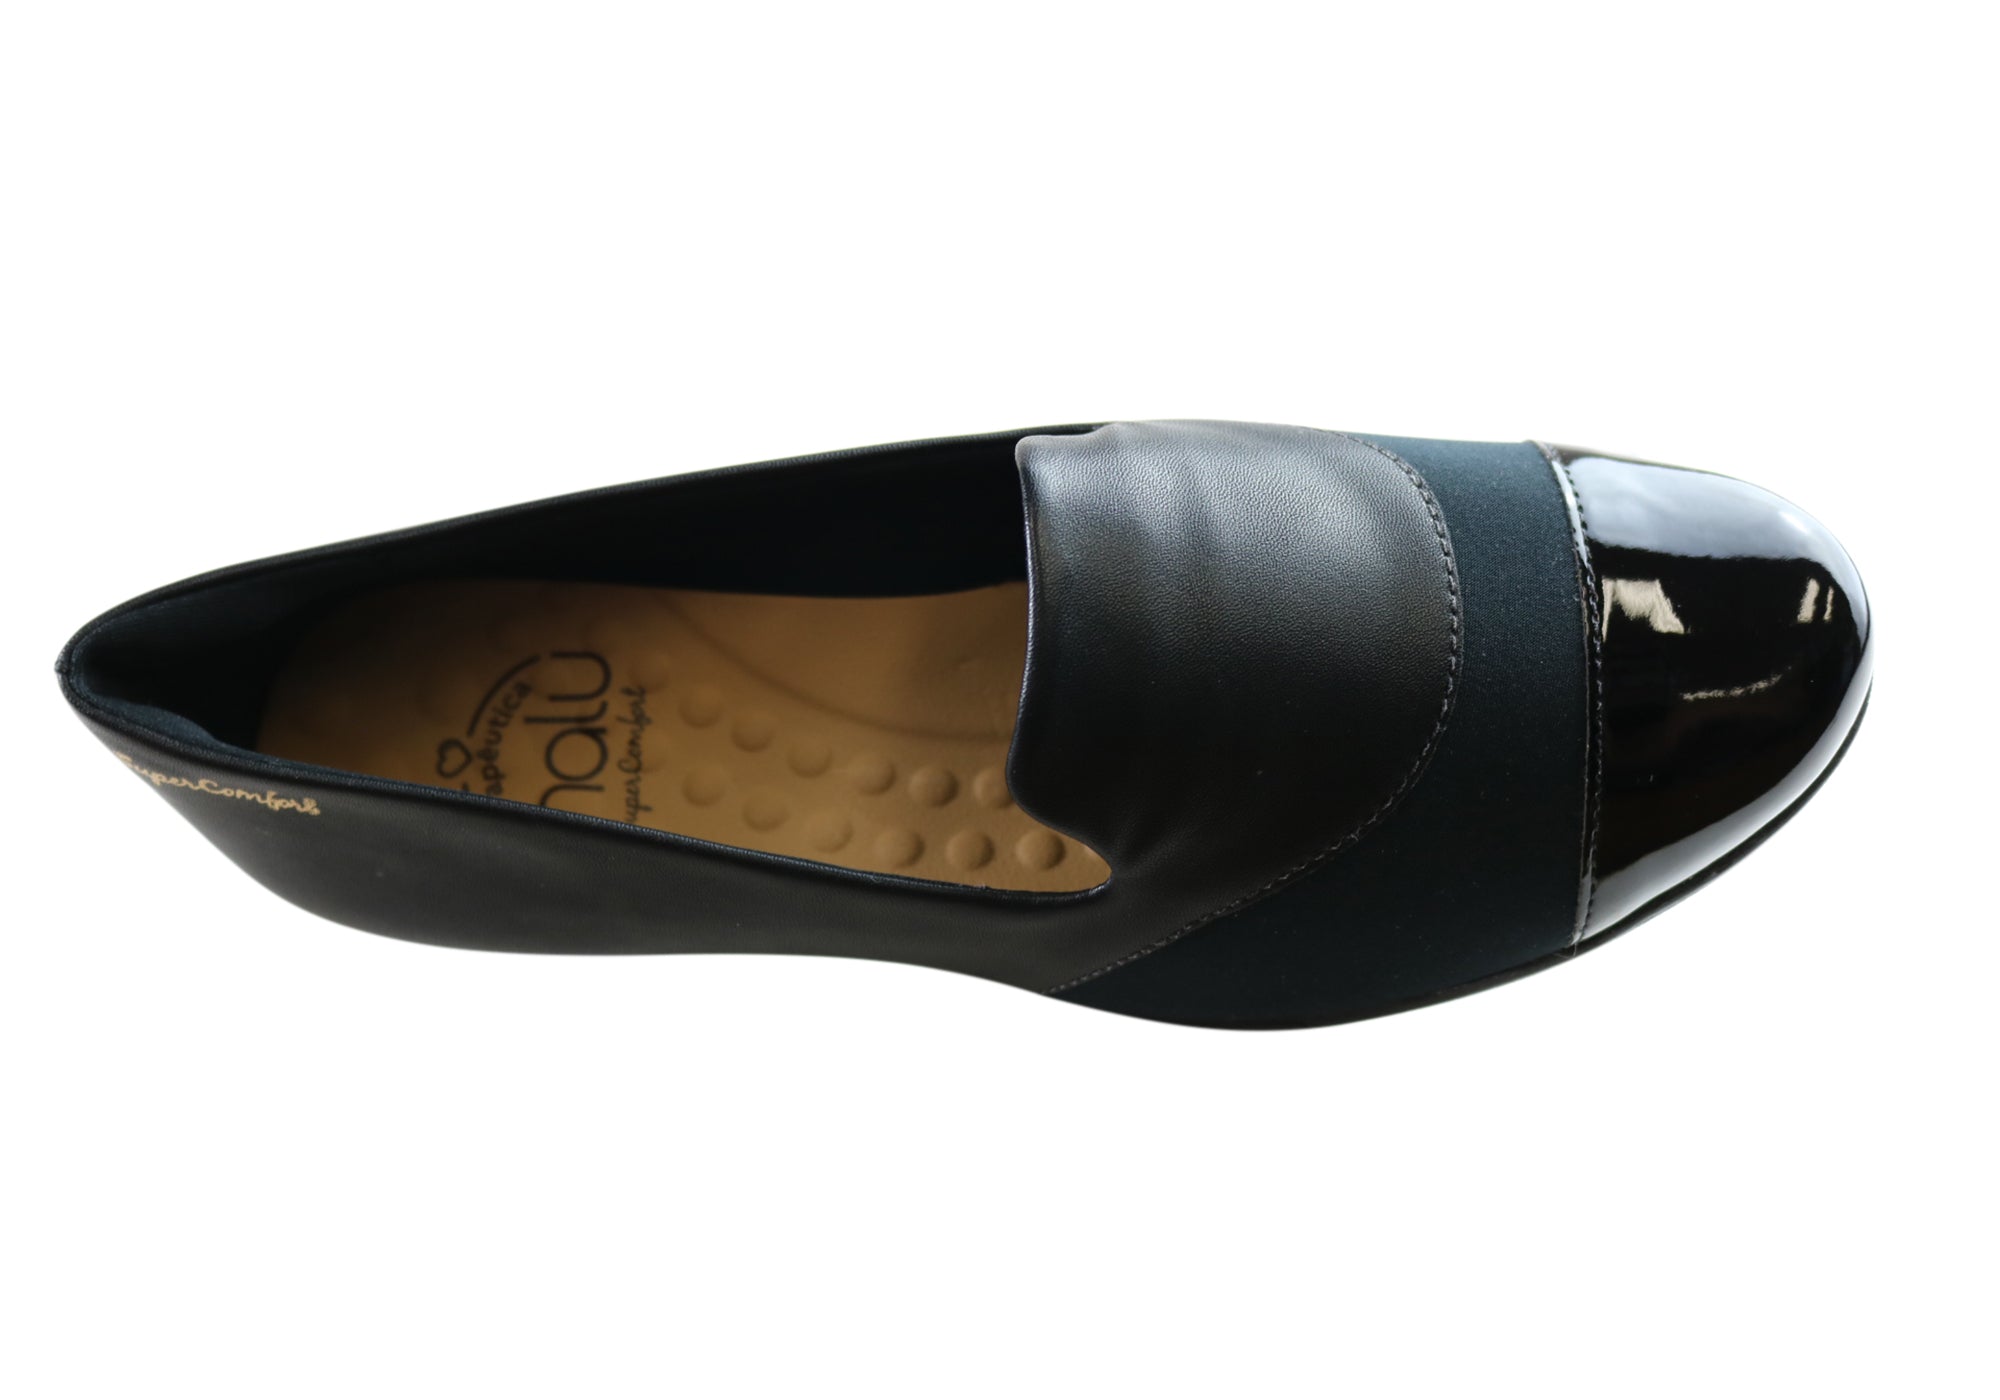 Malu Supercomfort Brea Womens Comfort Slip On Shoes Made In Brazil